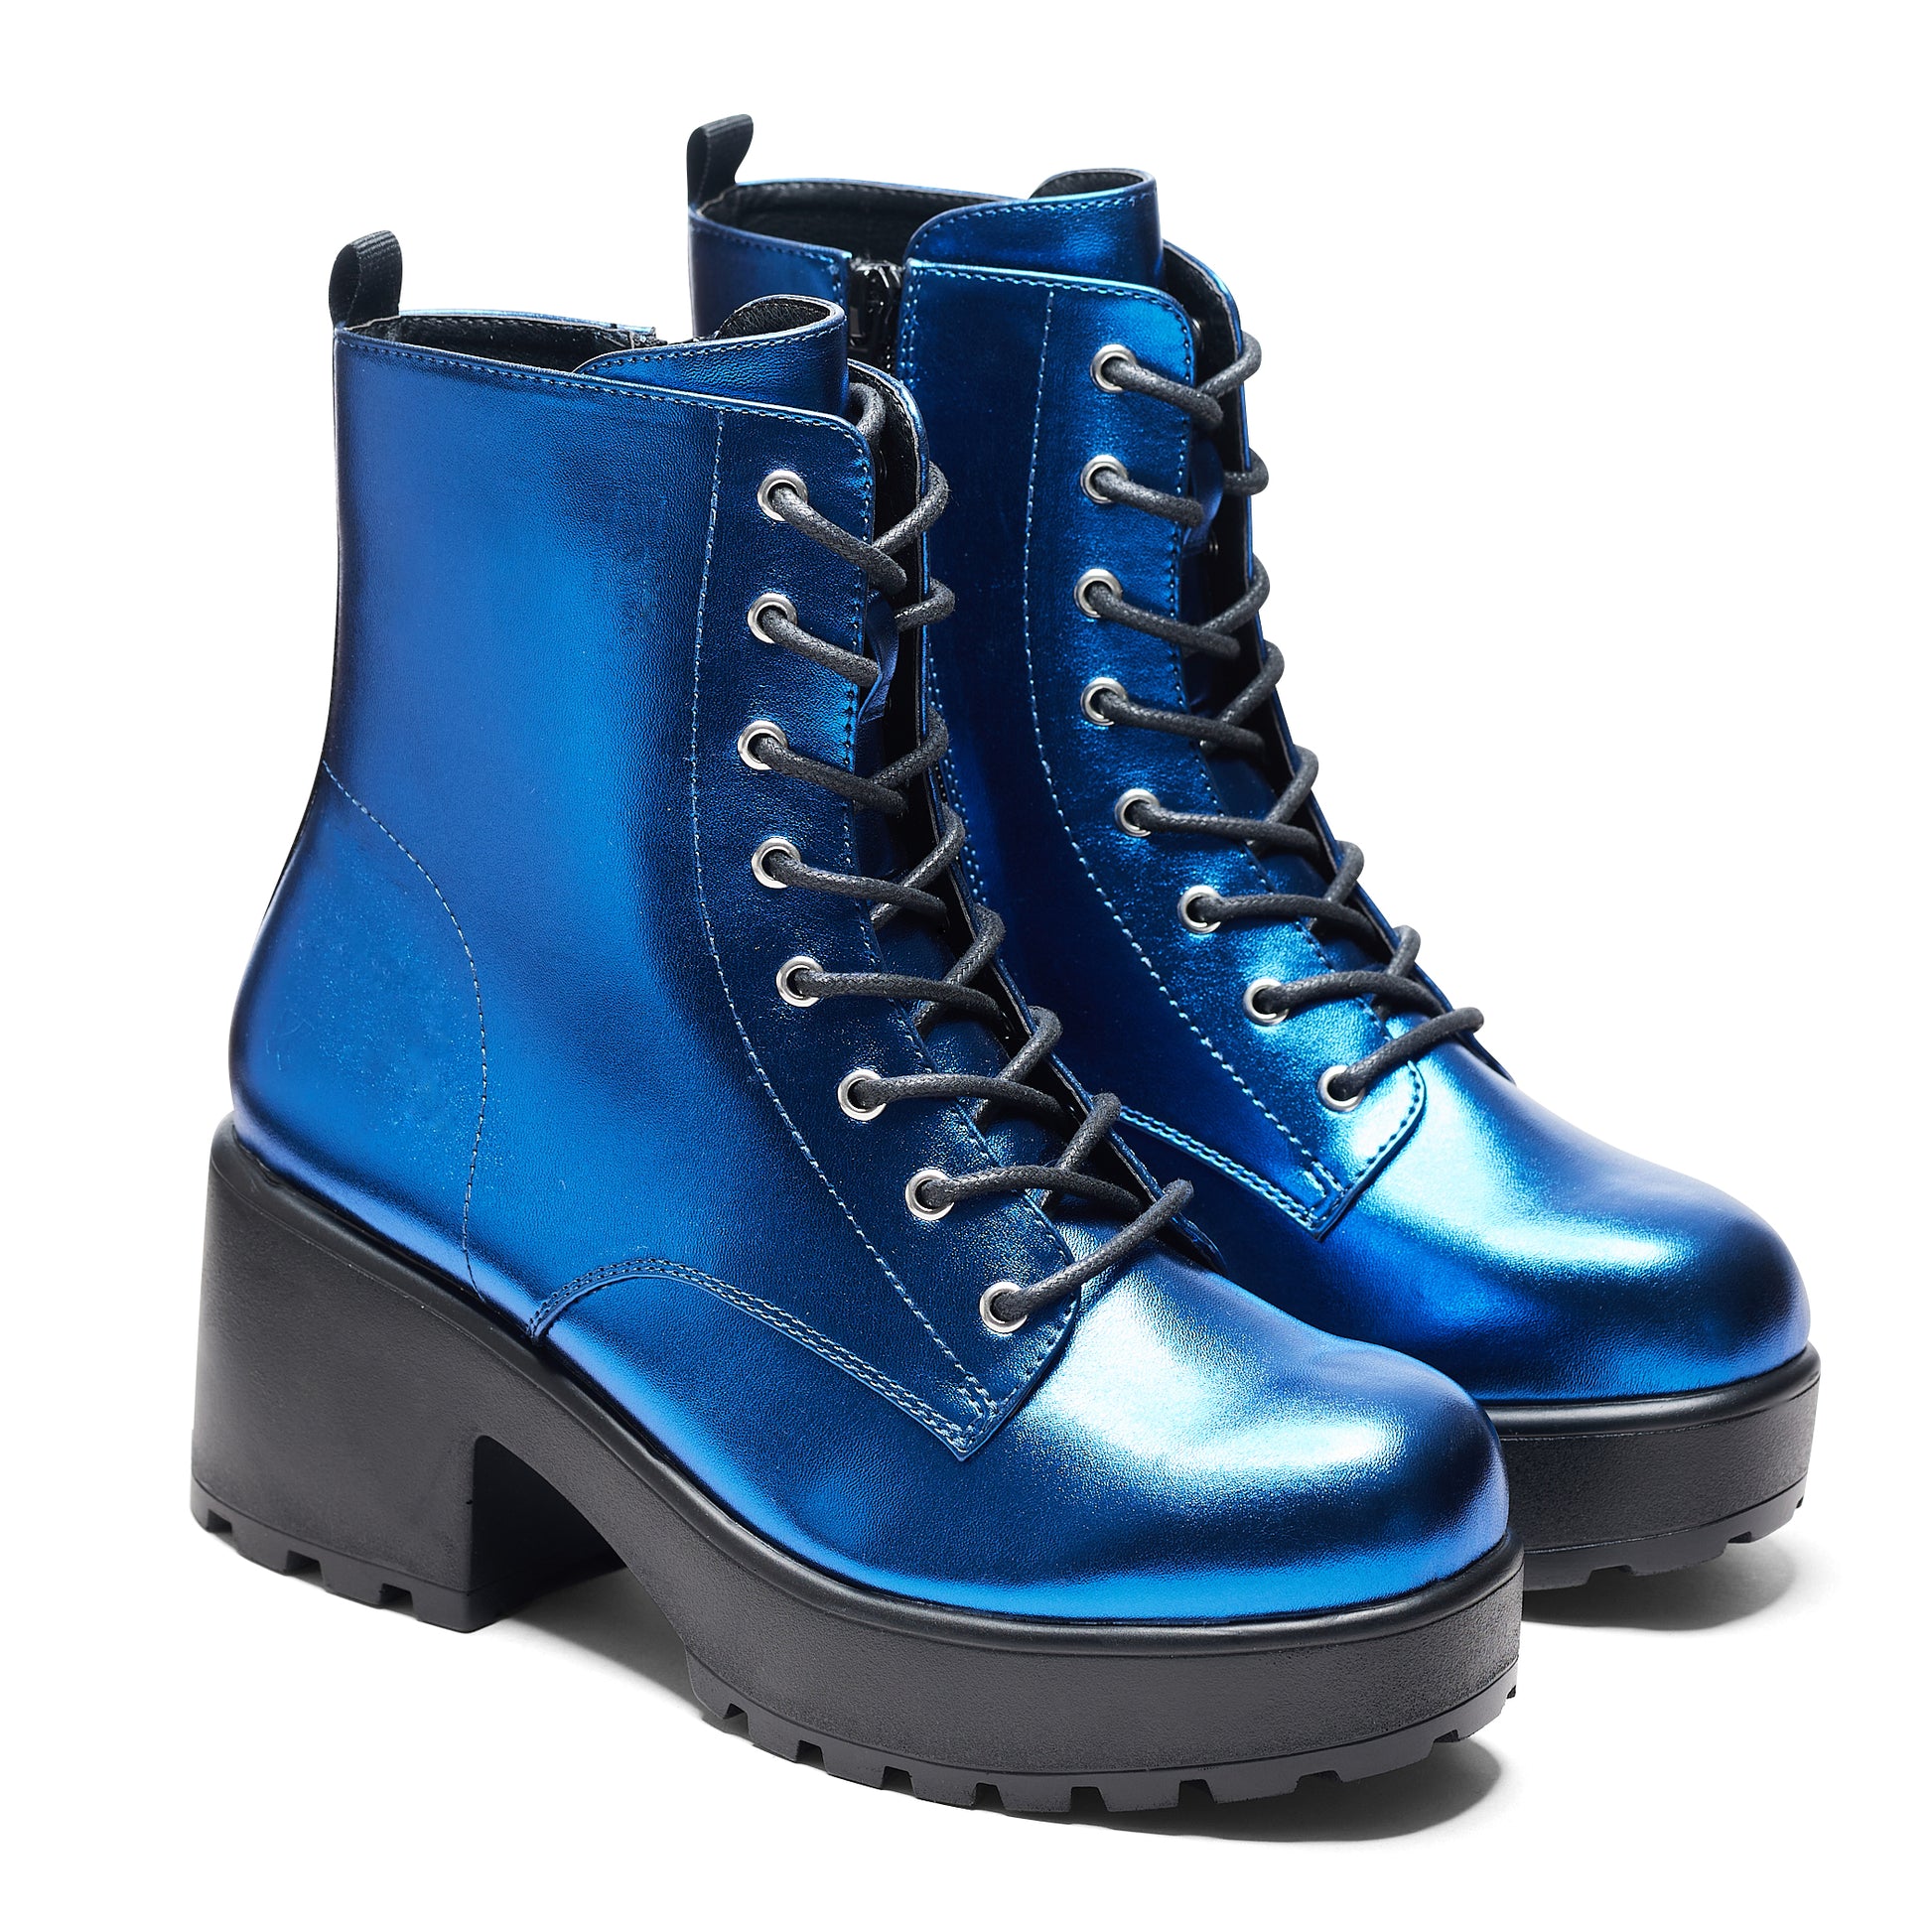 Cobalt Haze Military Platform Boots - Ankle Boots - KOI Footwear - Blue - Three-Quarter View